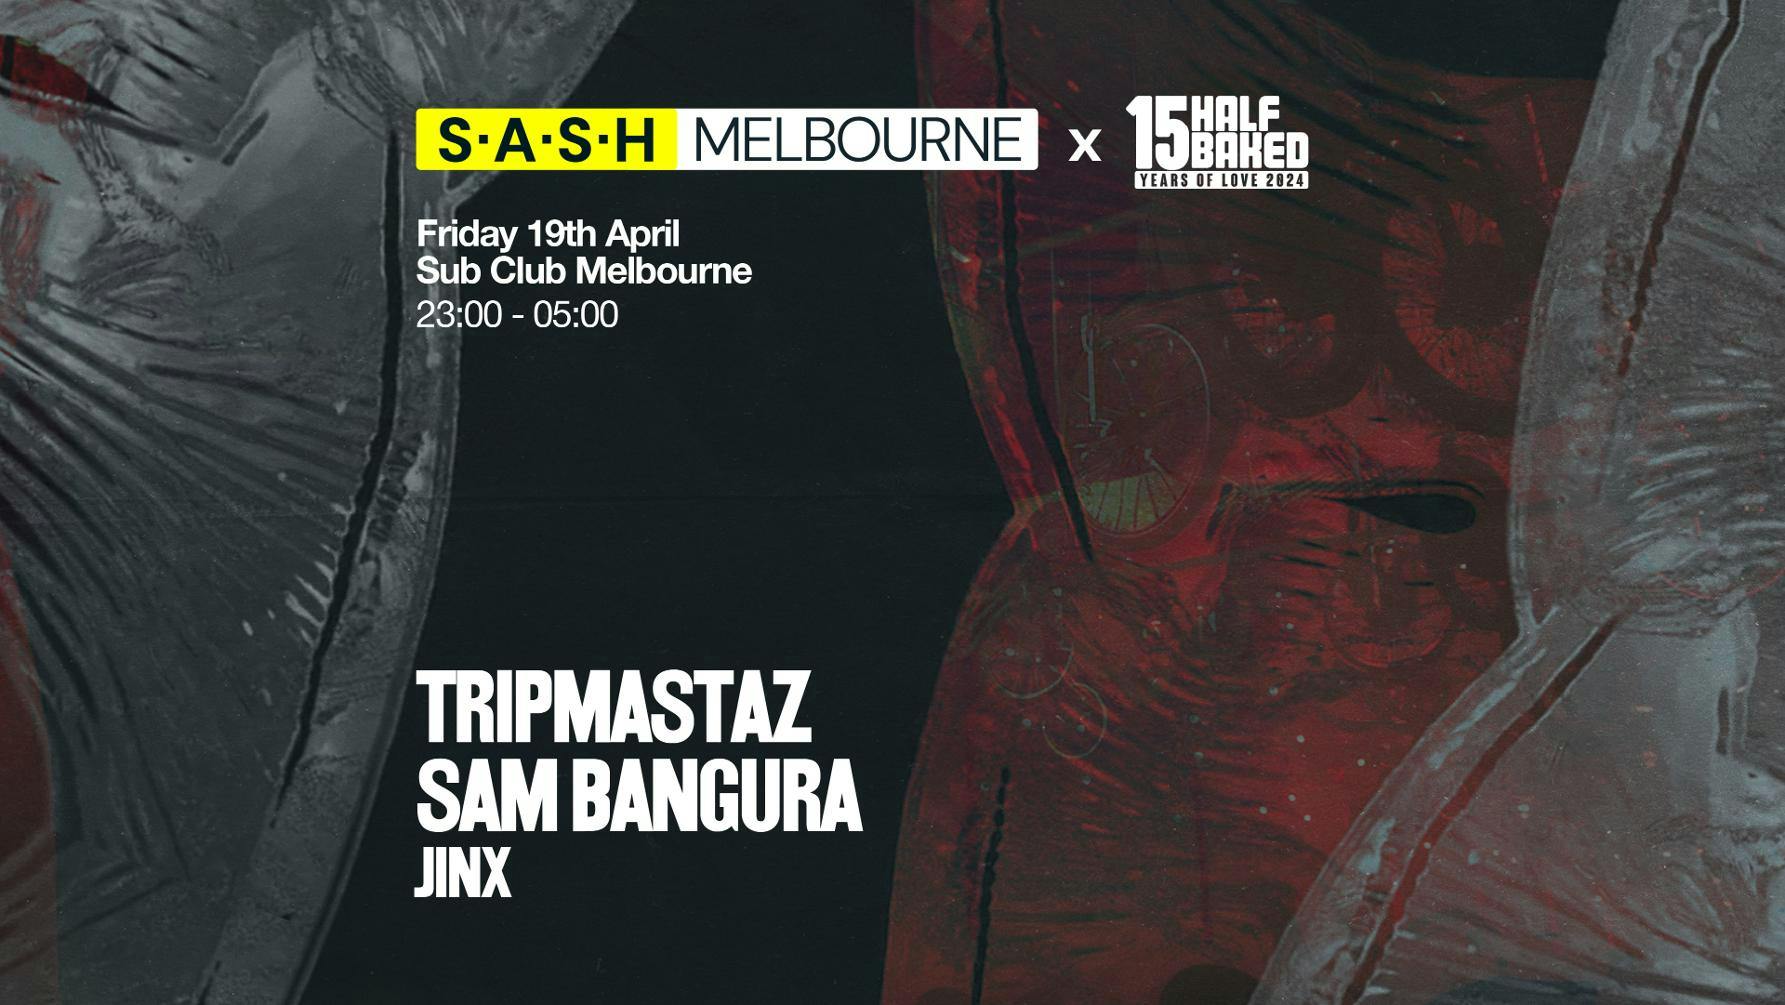 ★ S.A.S.H Melbourne Presents Half Baked ★ Tripmastaz & Sam Bangura ★ Friday April 19th ★